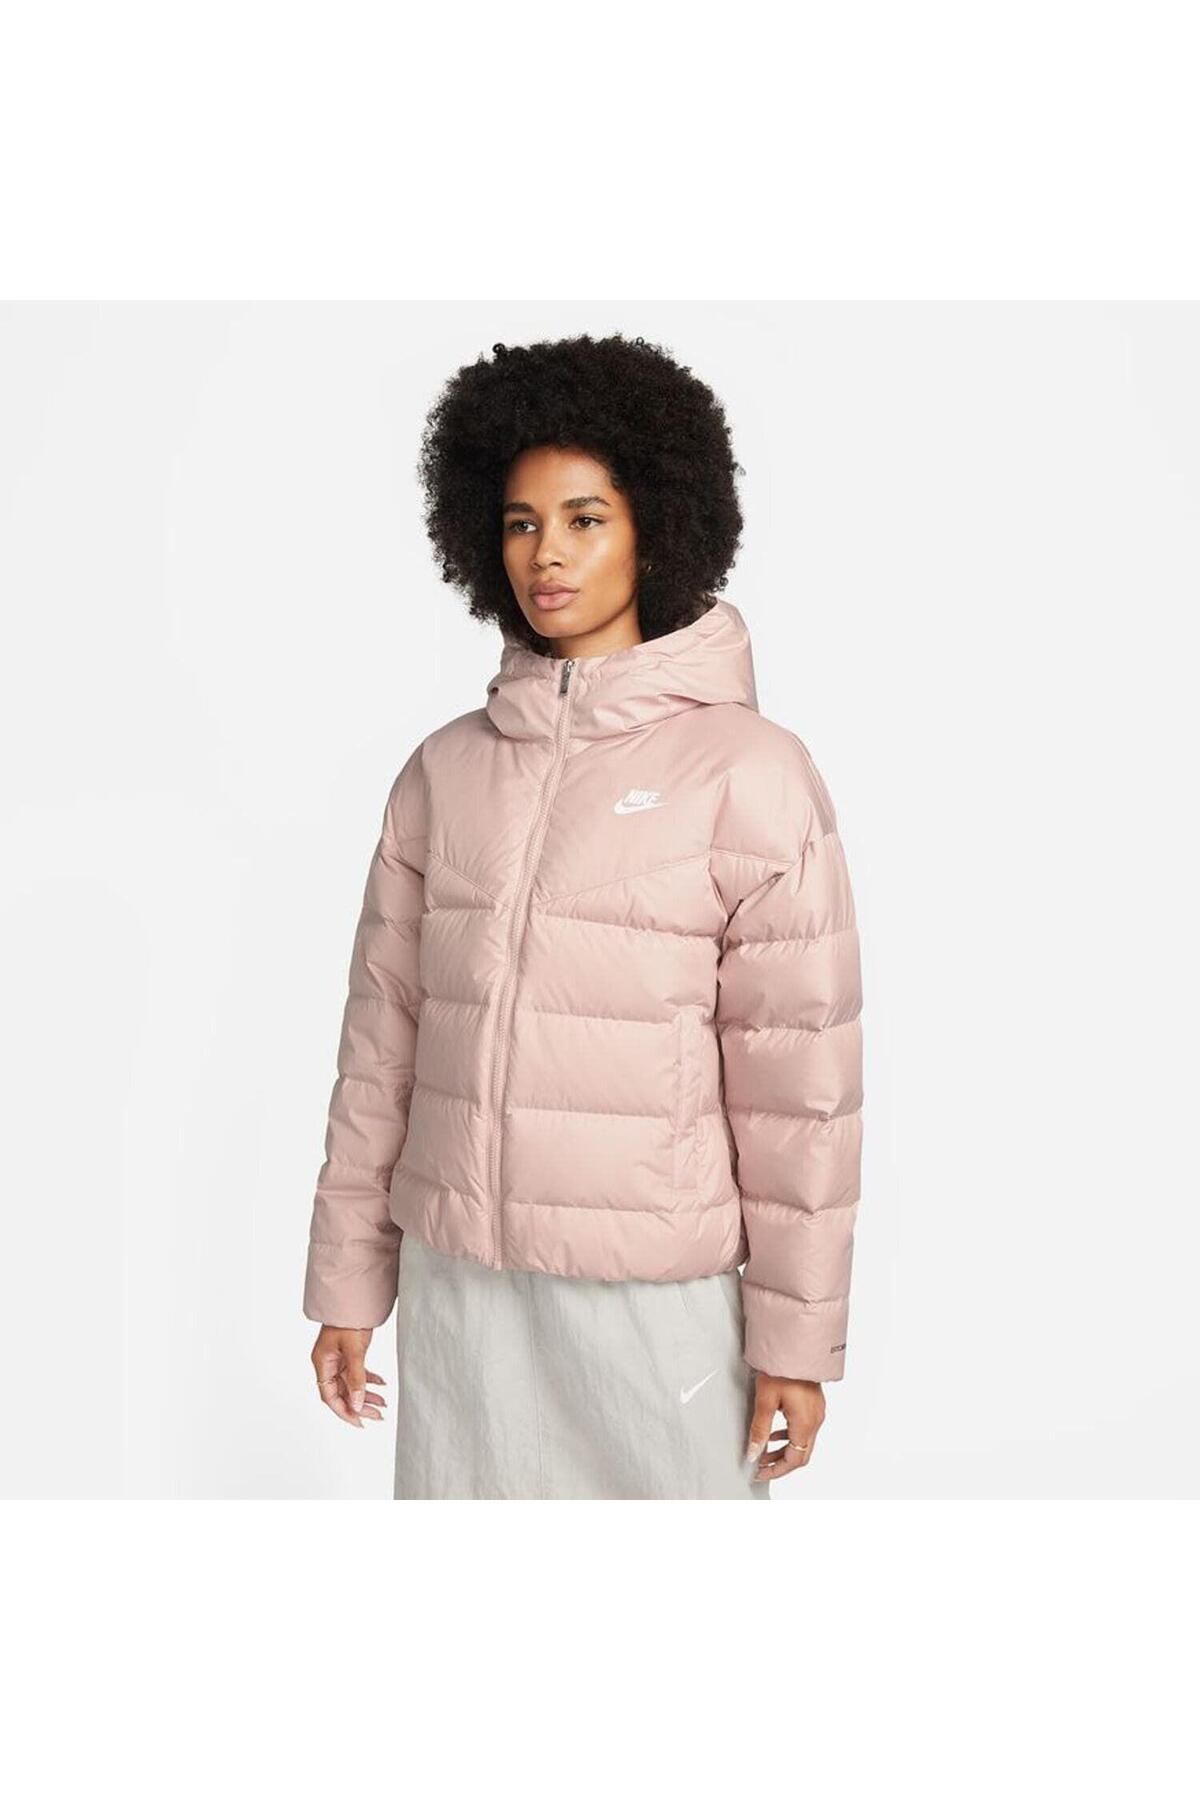 Nike Womens Storm Fit Pink Puffer Down Warm Winter Jacket Coat Somon Pembe Şişme Mont Dq5903-601